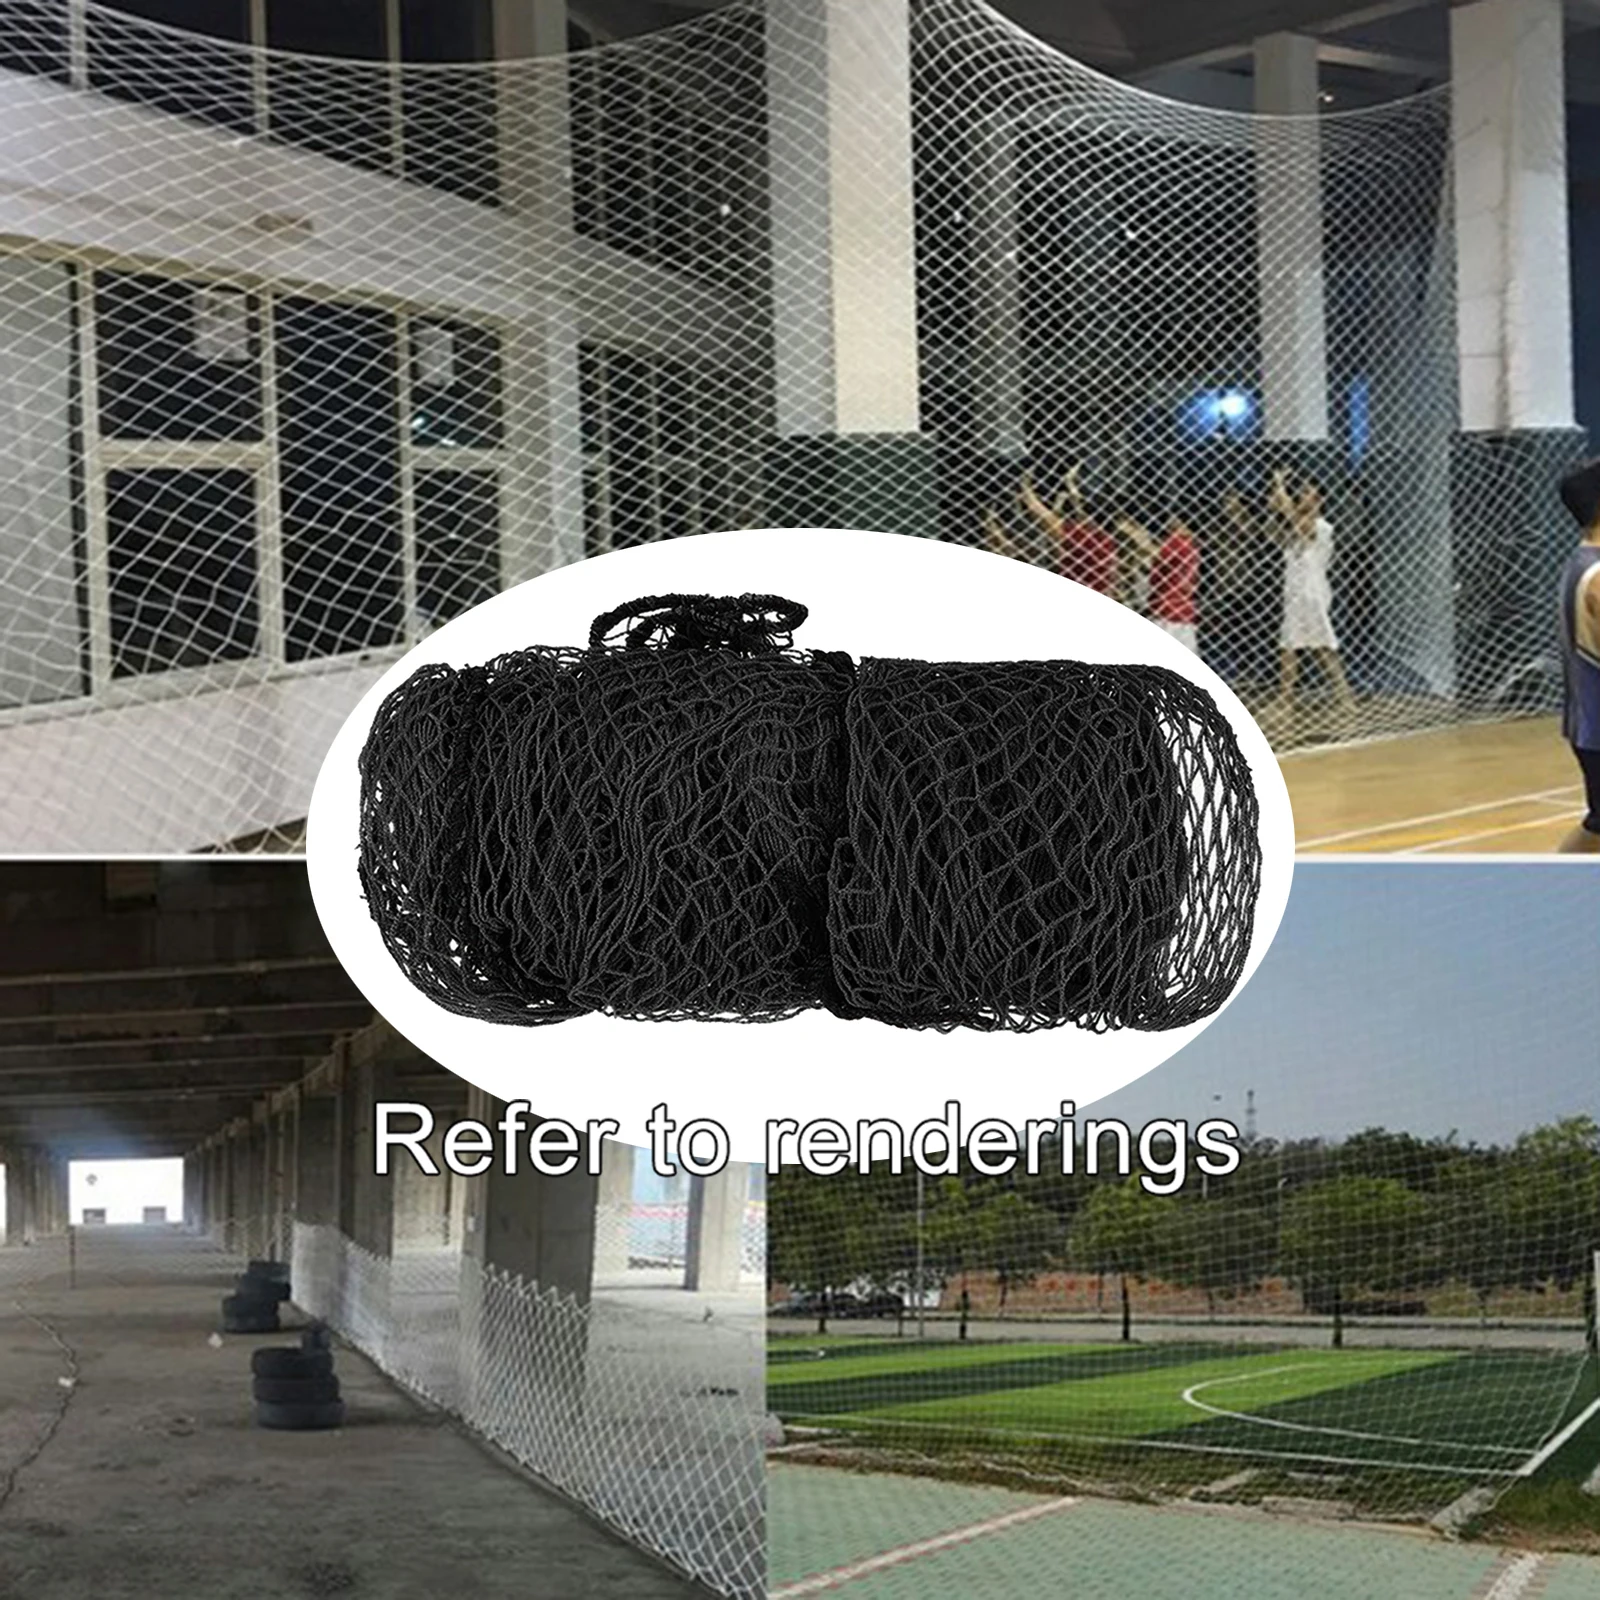 3.3Yard Portable Golf Practice Net Heavy Duty Rope Border Sports Barrier Swing Training Netting Indoor/Outdoor